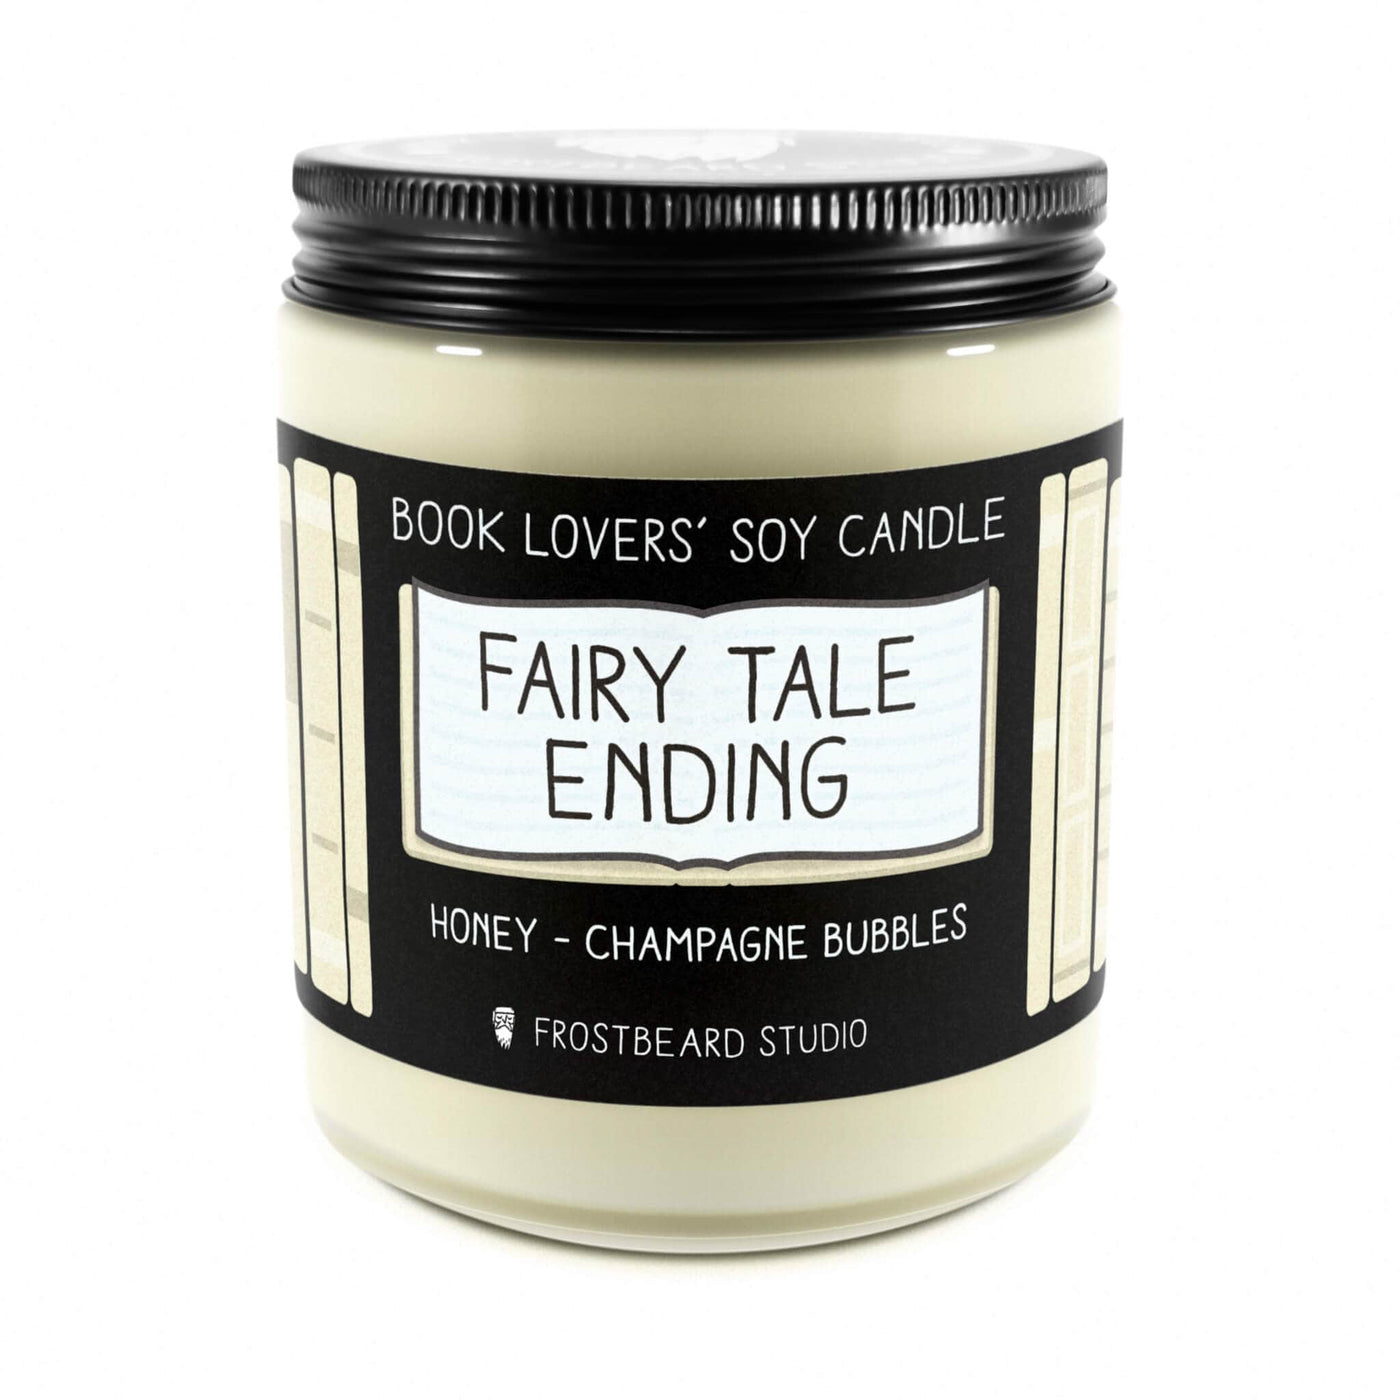 Fairy Tale Ending - 8 oz Jar - Book Lovers' Soy Candle - Frostbeard Studio